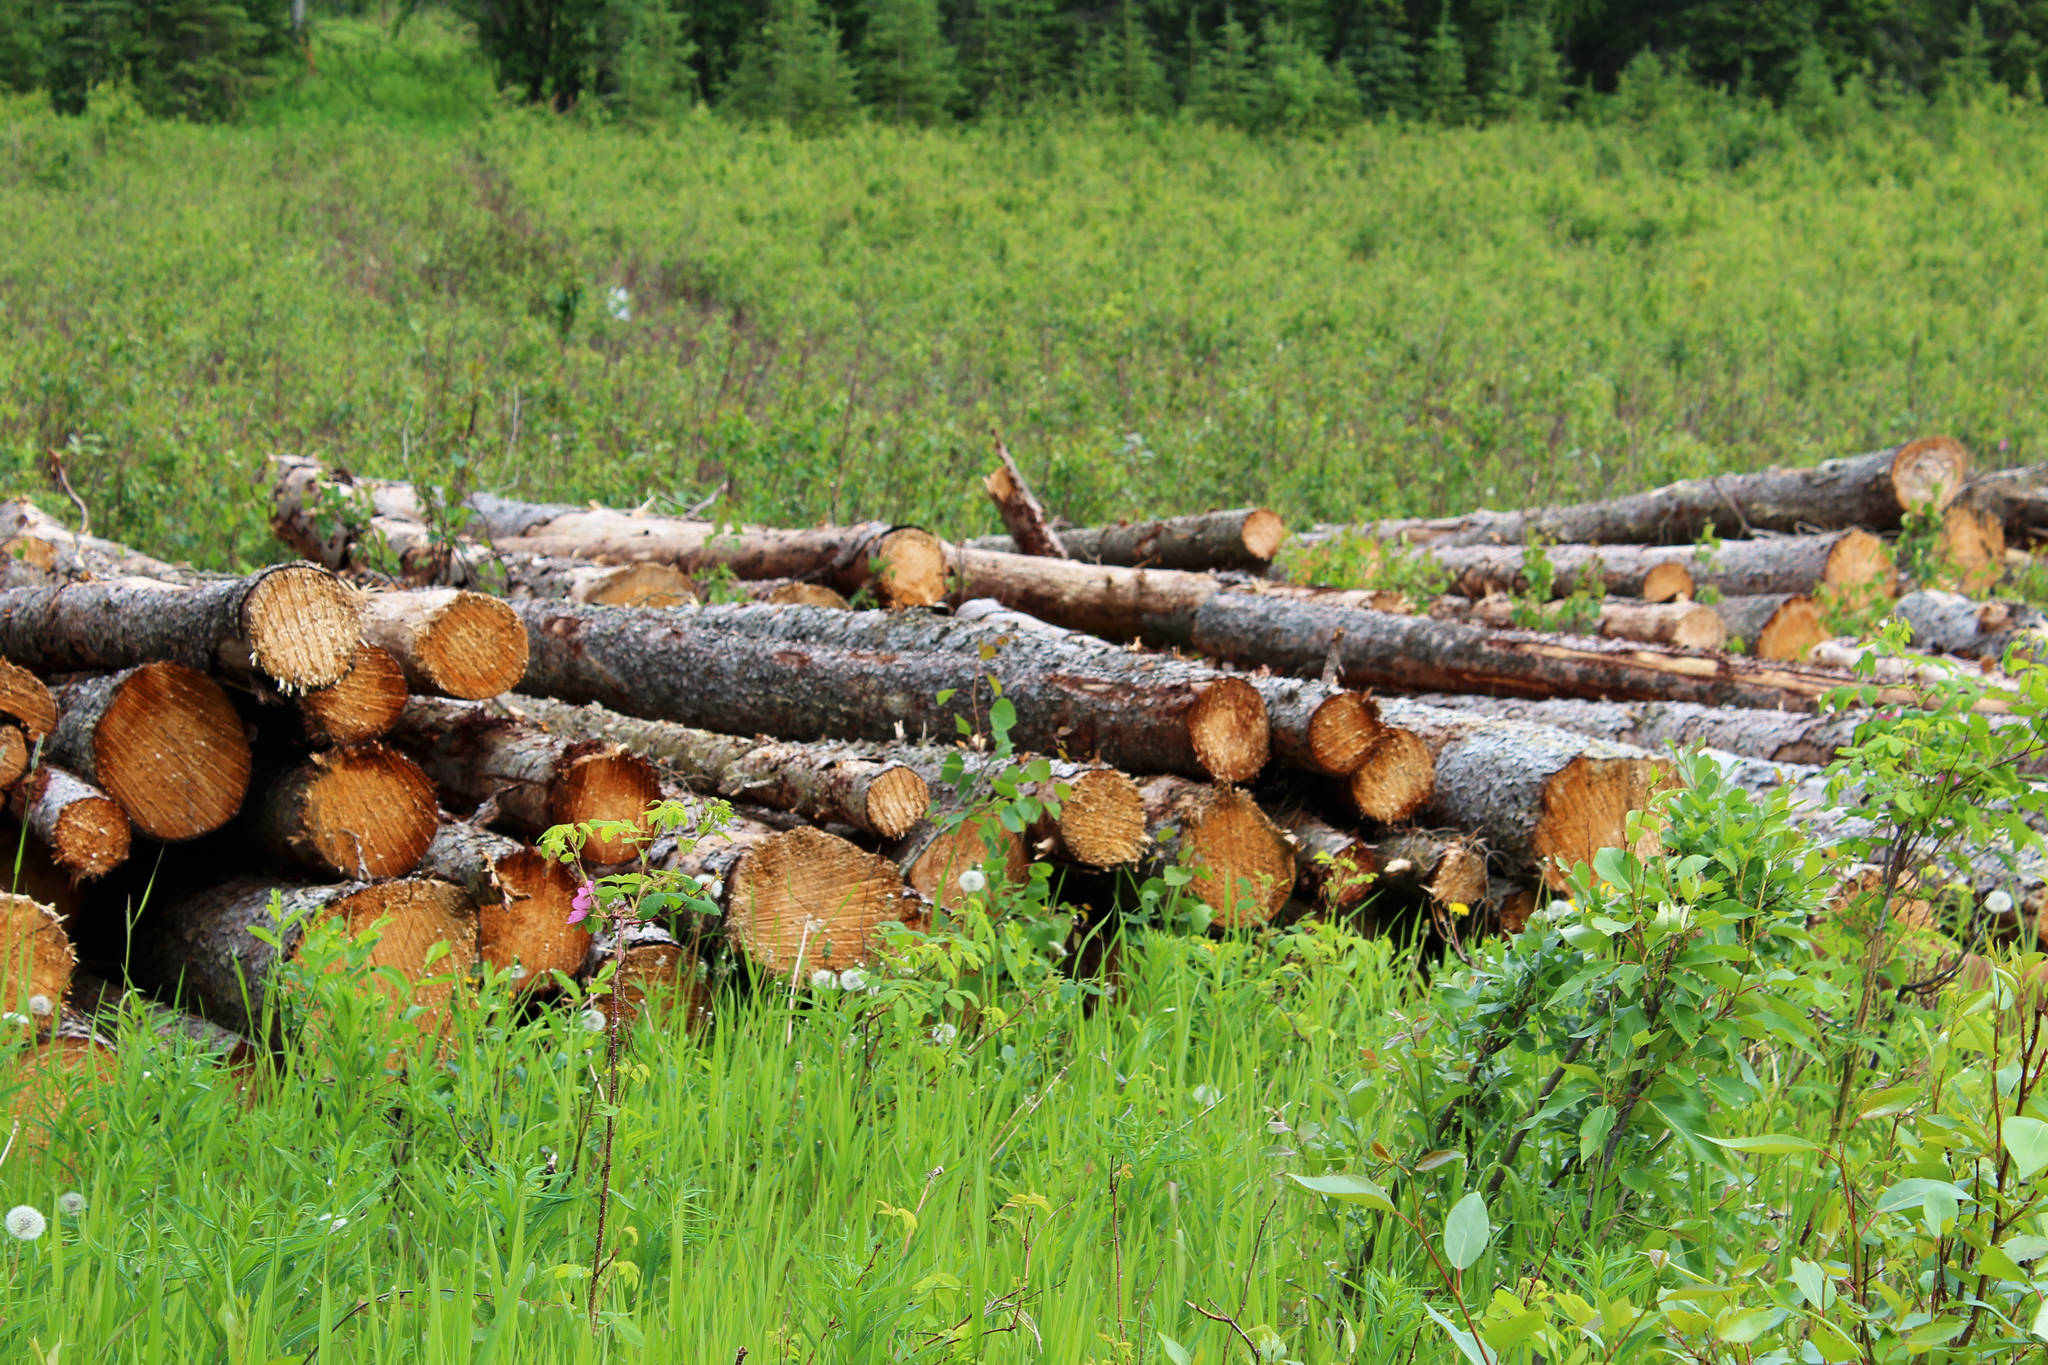 Logs are stacked near the Central Peninsula Landfill on Thursday, July 1, 2021 near Soldotna, Alaska. (Ashlyn O’Hara/Peninsula Clarion)